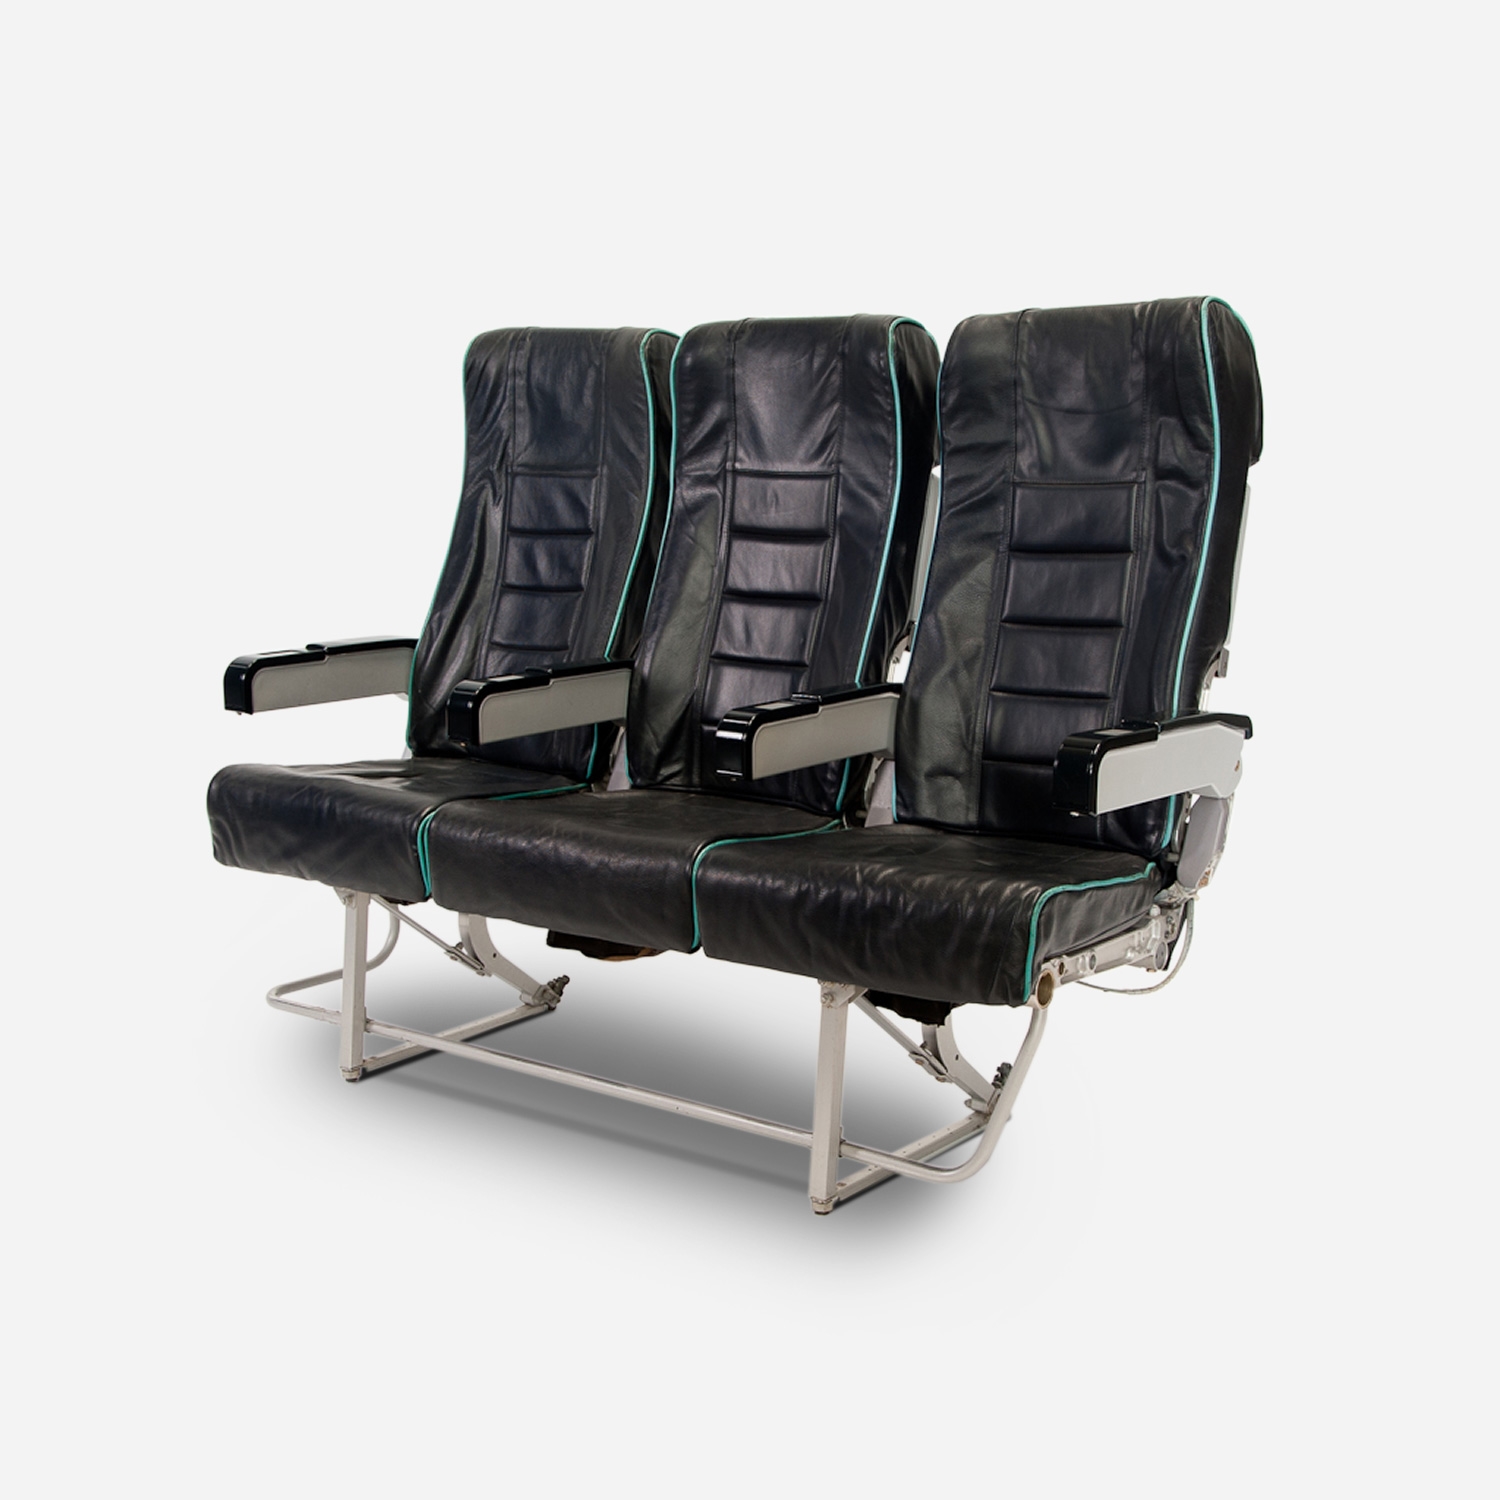 Koito -B737Ng Triple Economy Class Seats - Genuine Leather